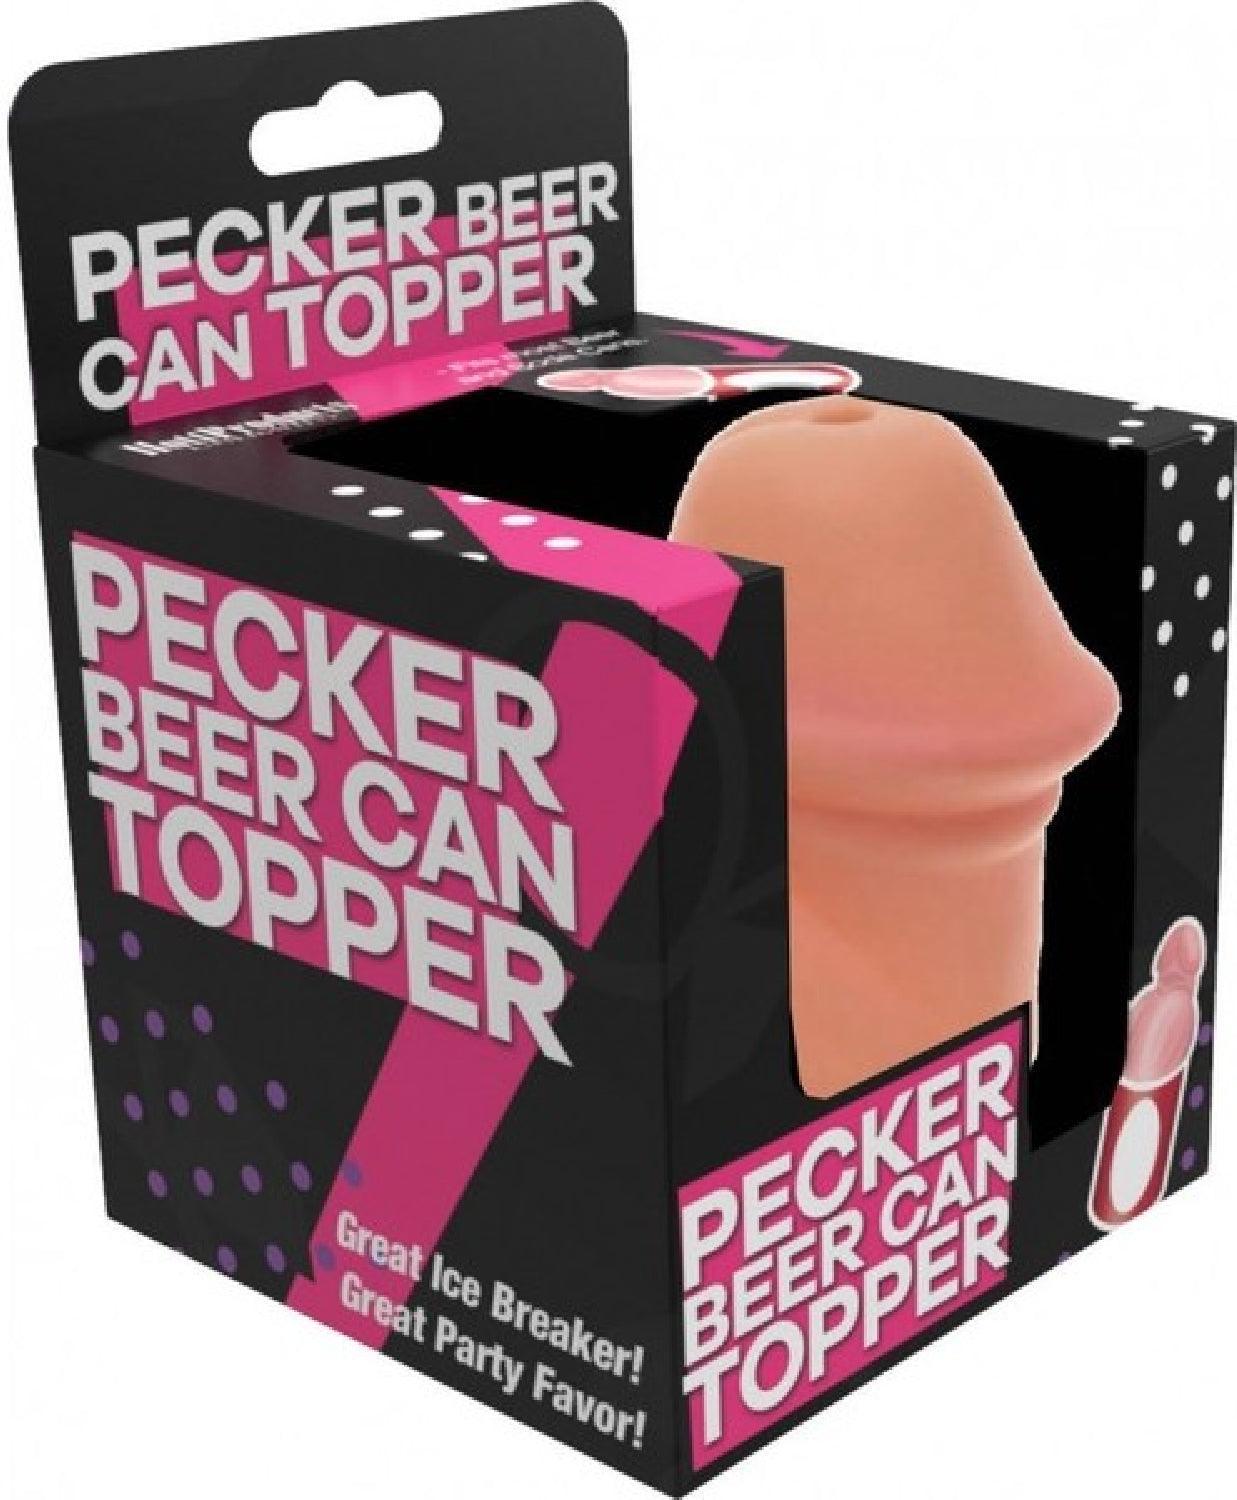 Pecker Beer Can Topper - Take A Peek